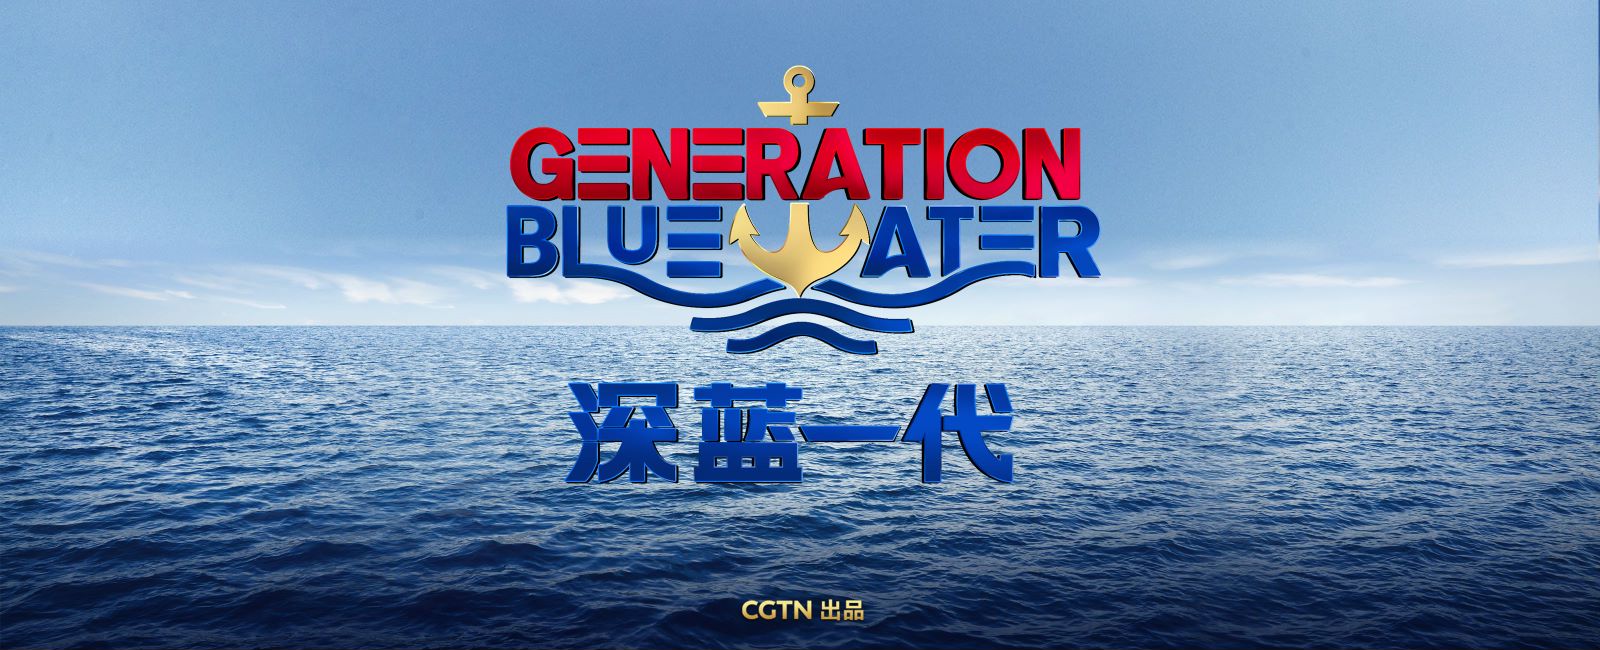 Generation Blue Water